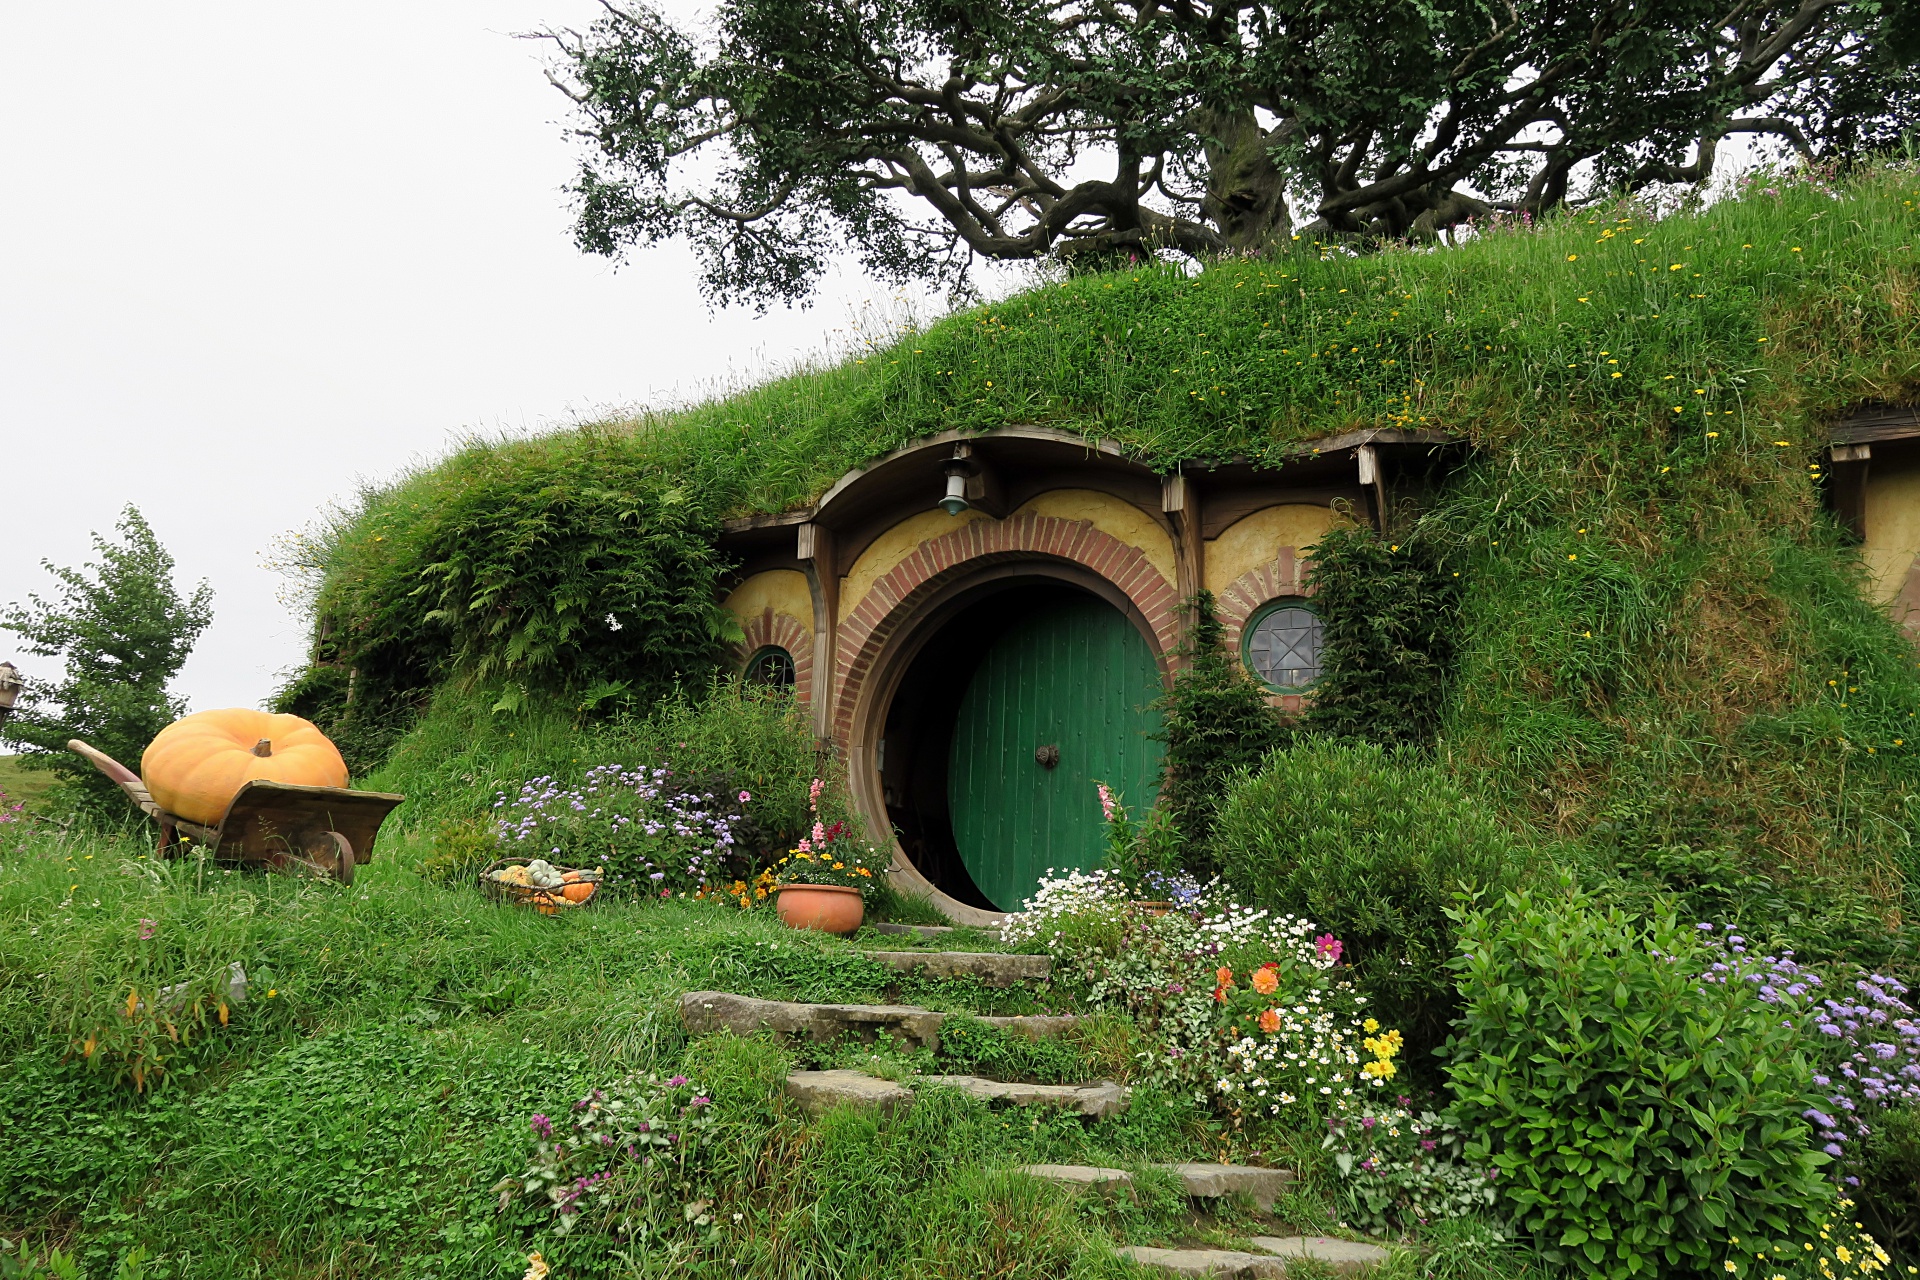 Bag End - Bilbo's House!